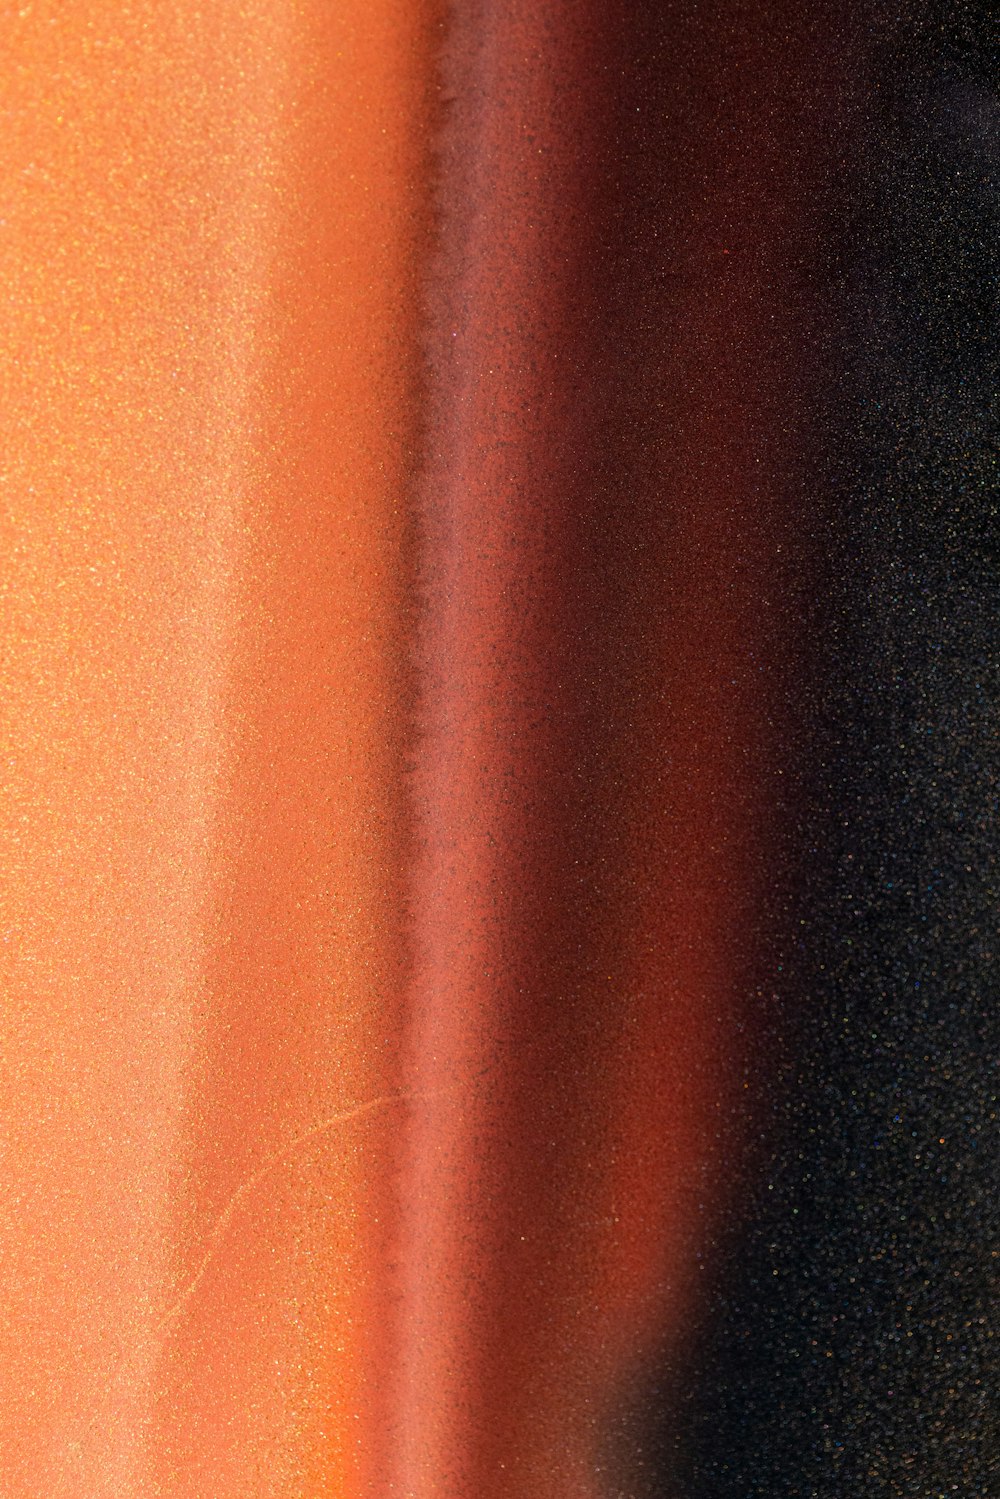 a close up of a black curtain